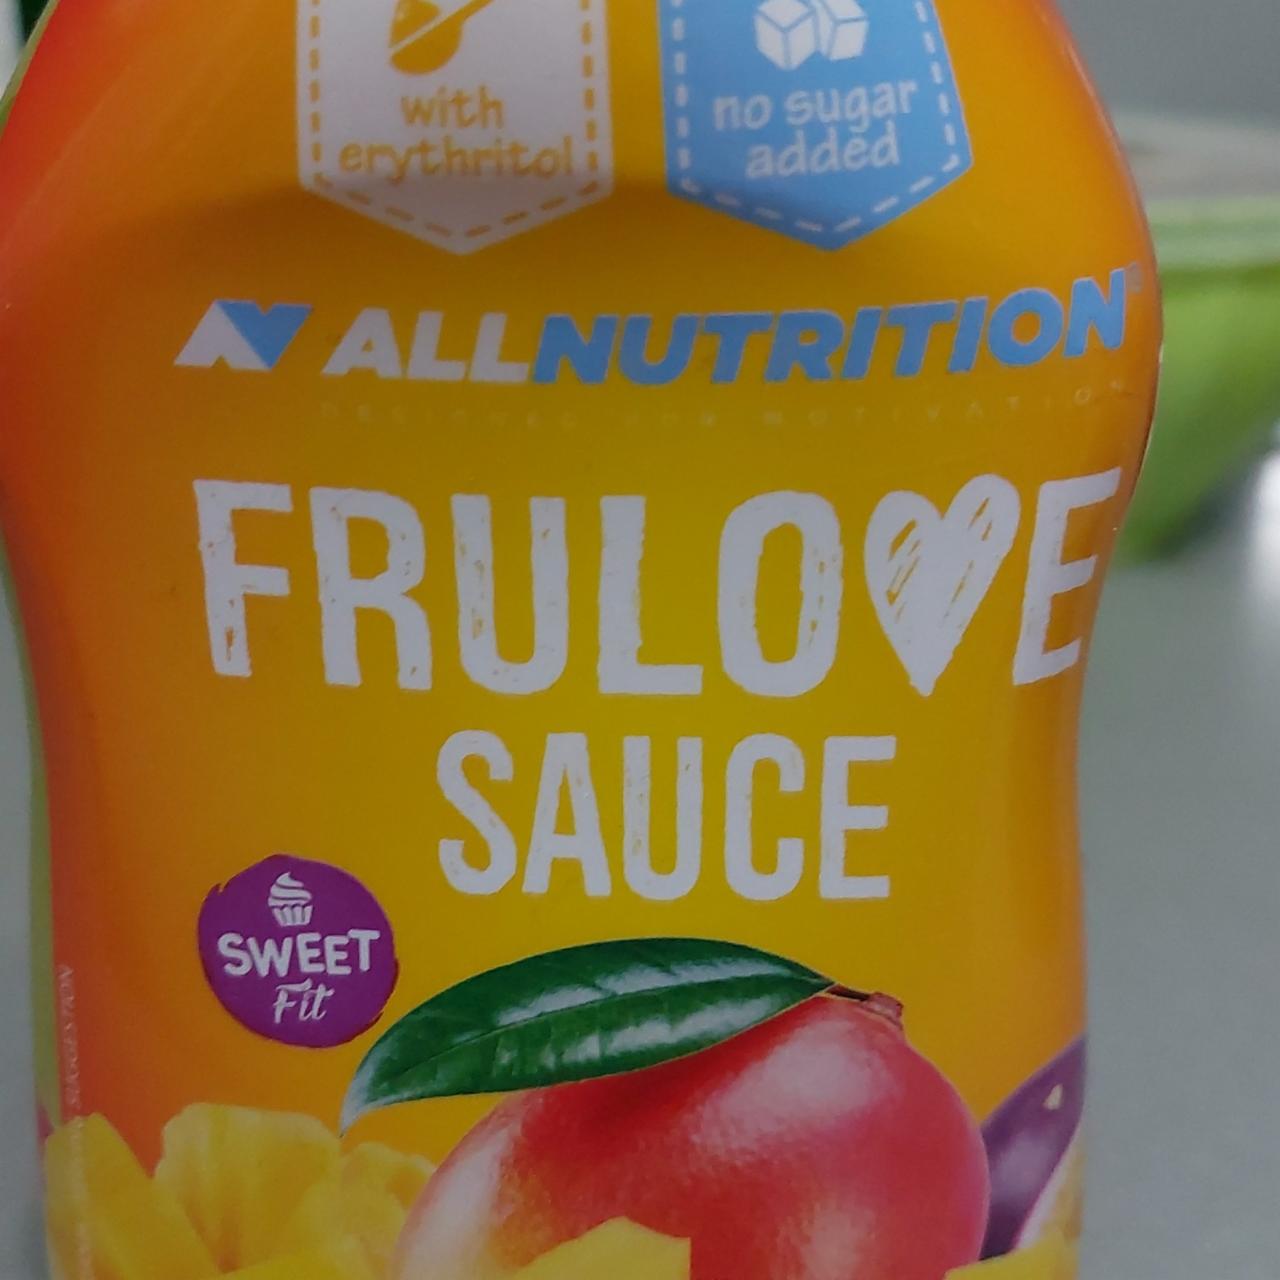 Fotografie - Frulove sauce mango-passion fruit Allnutrition